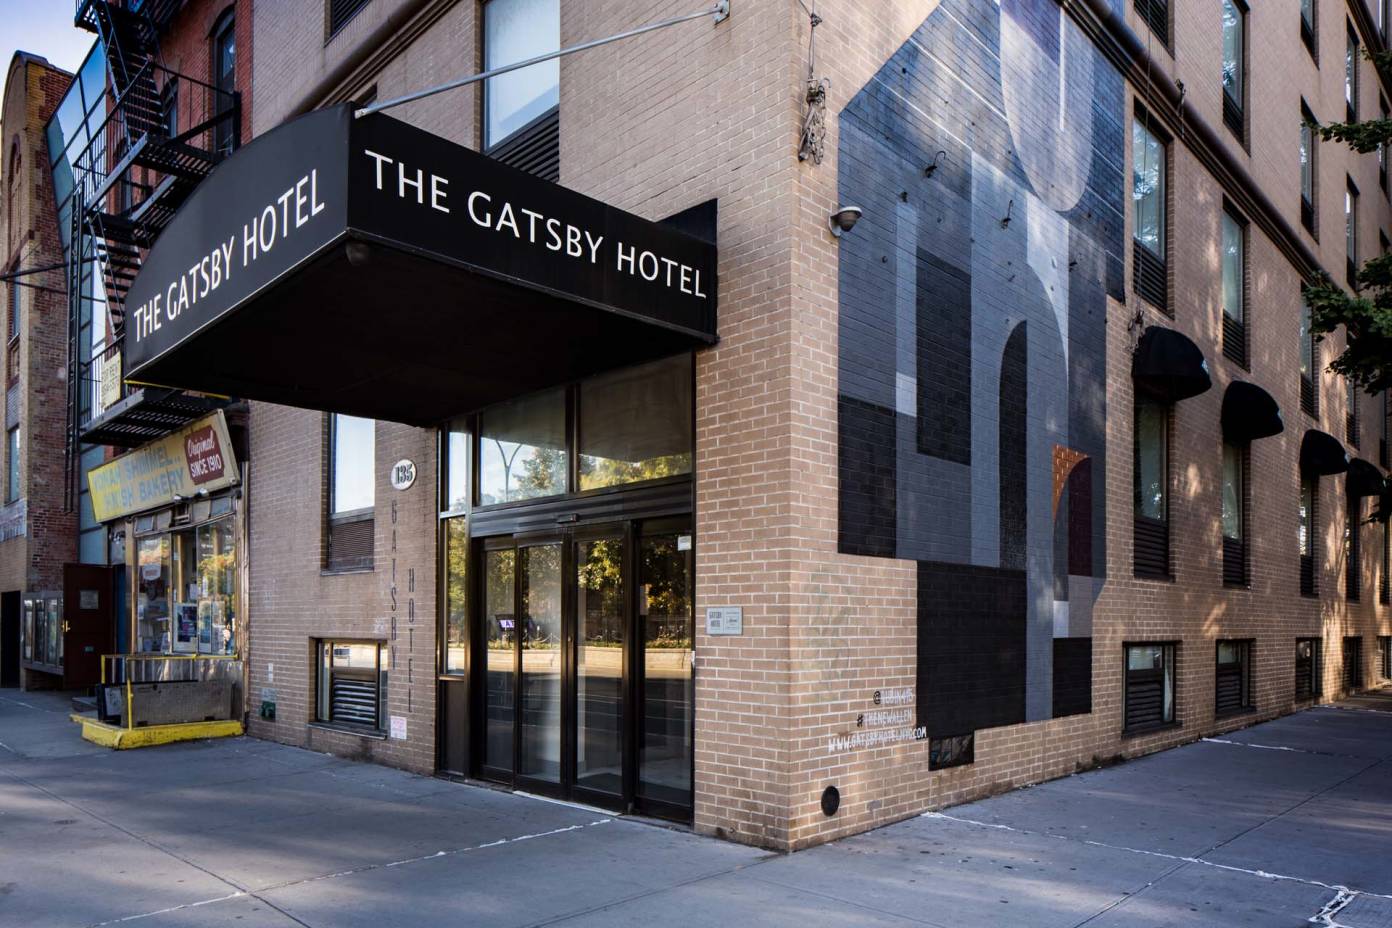 The Gatsby Hotel